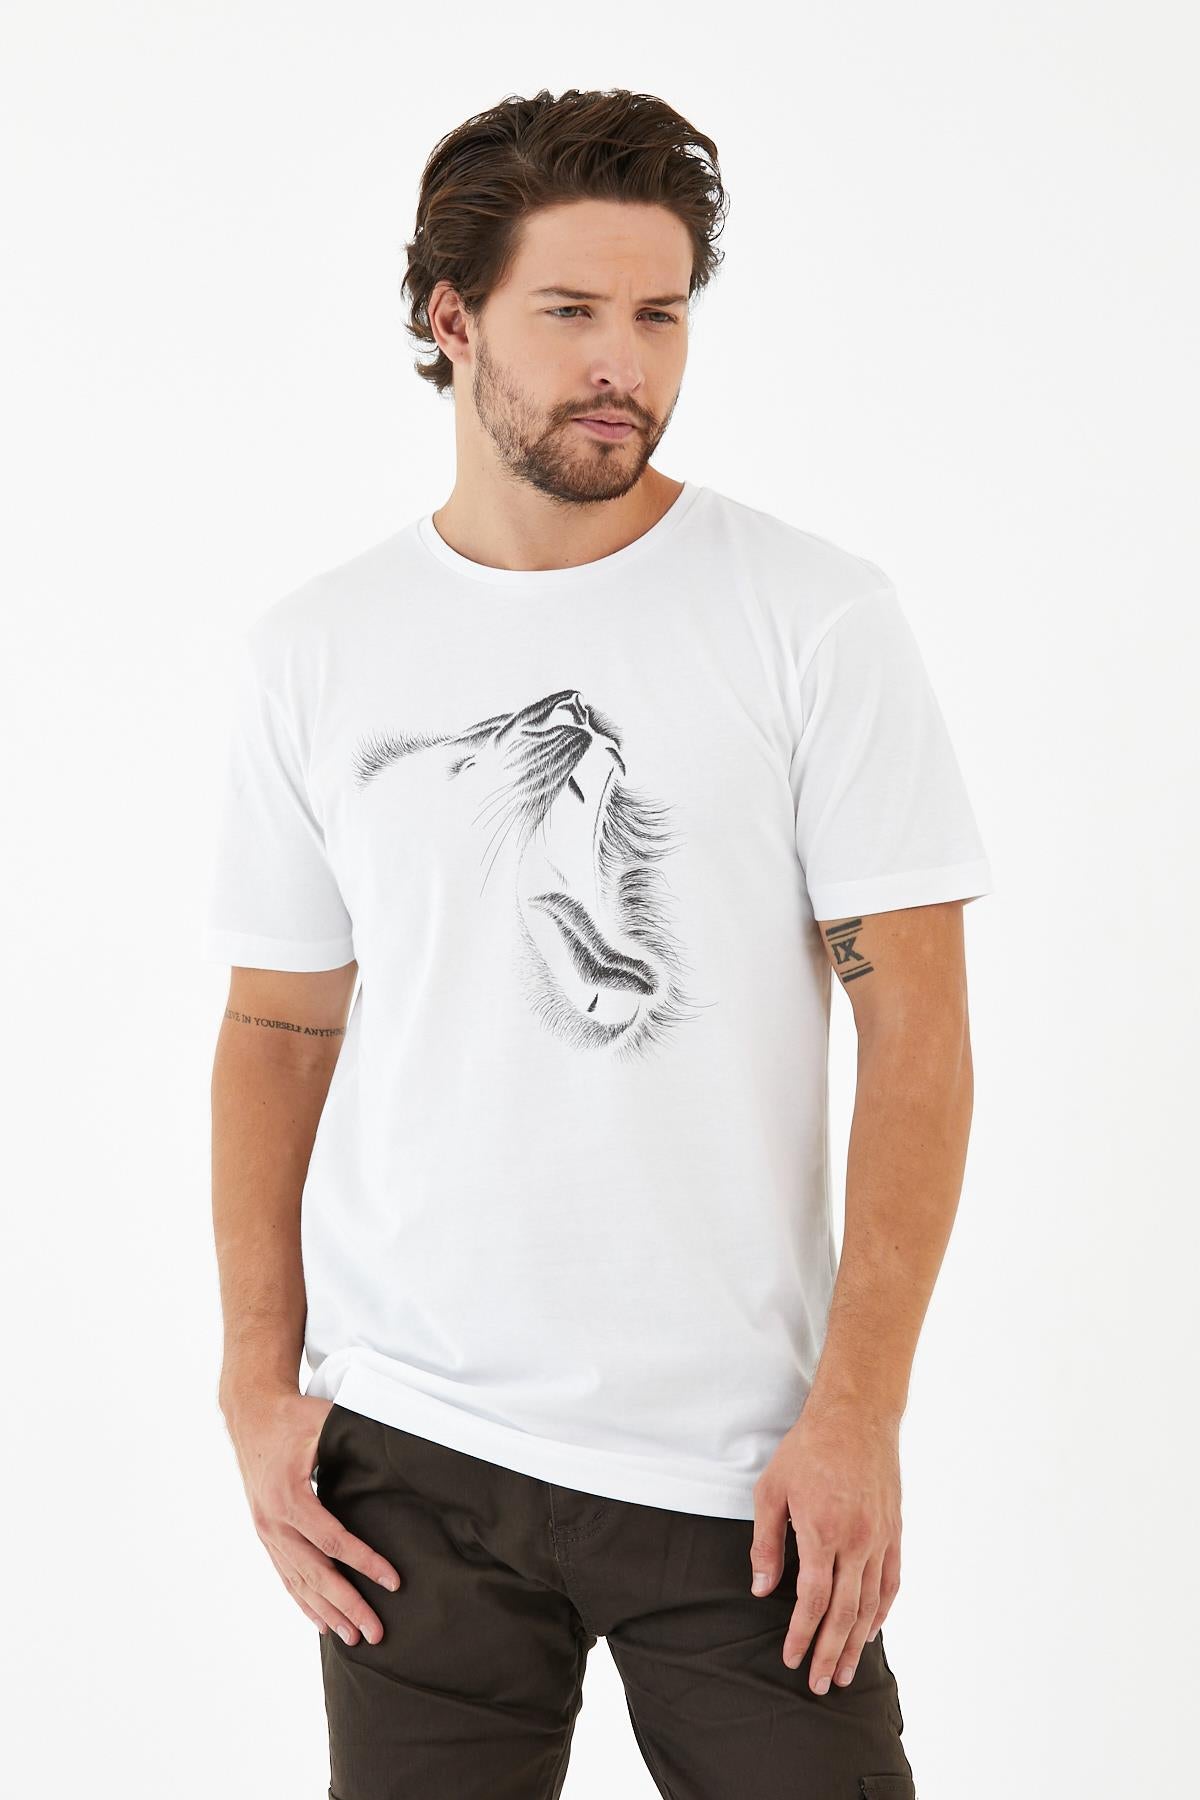 Lion Aslan Illustration Printed Crew Neck Men's T -shirt